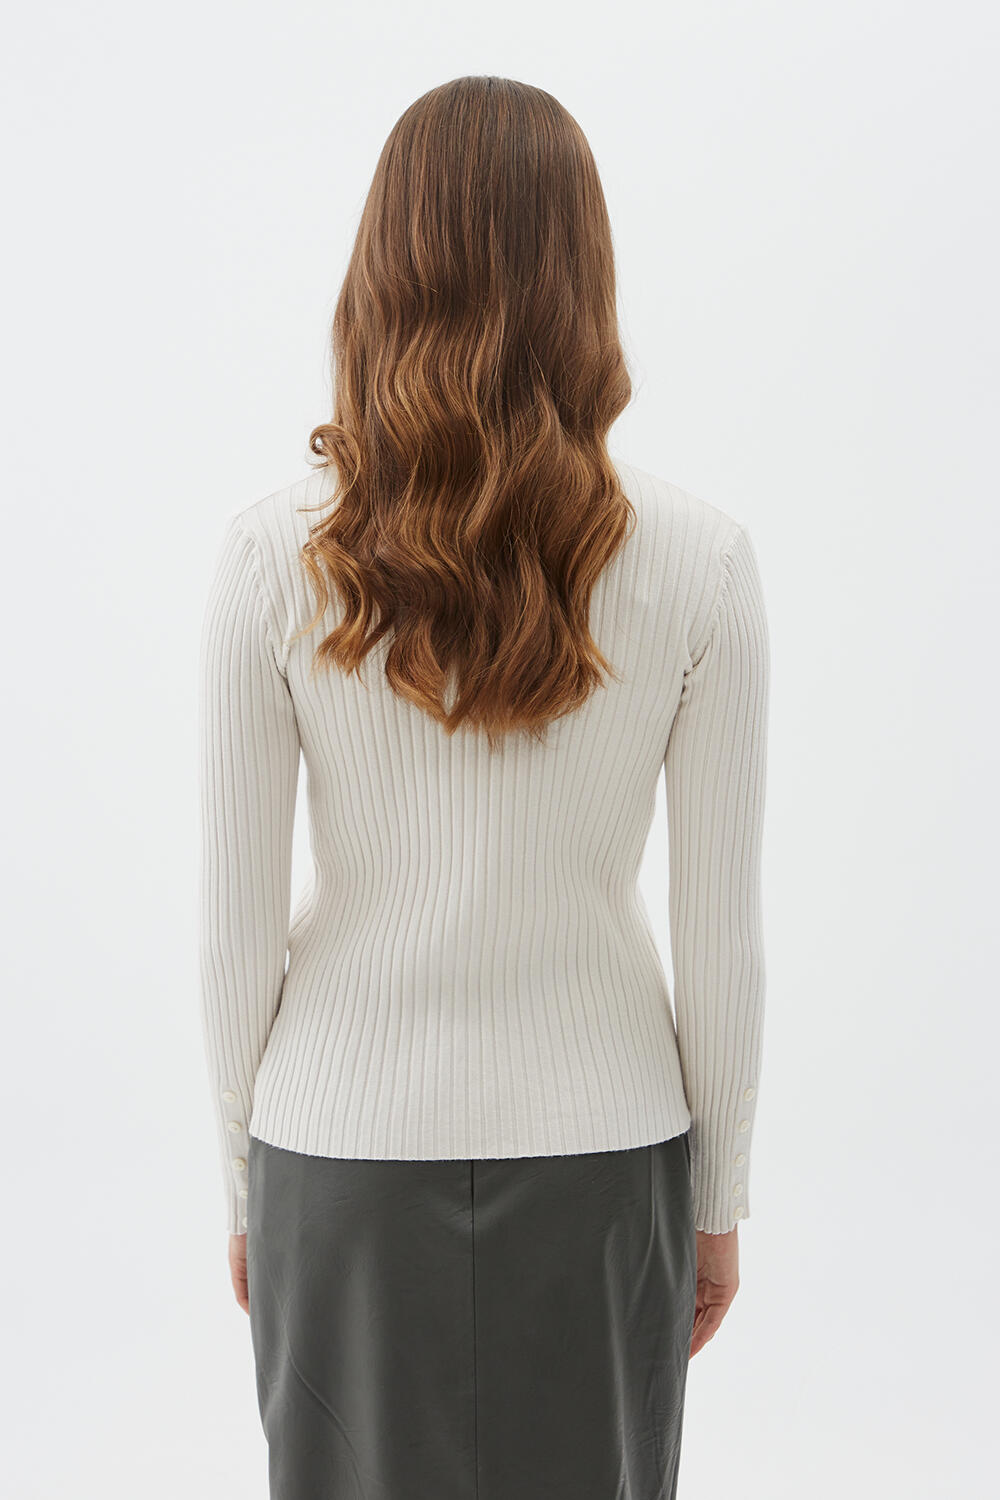 Women's Cashmere Vertical Rib Turtleneck Sweater